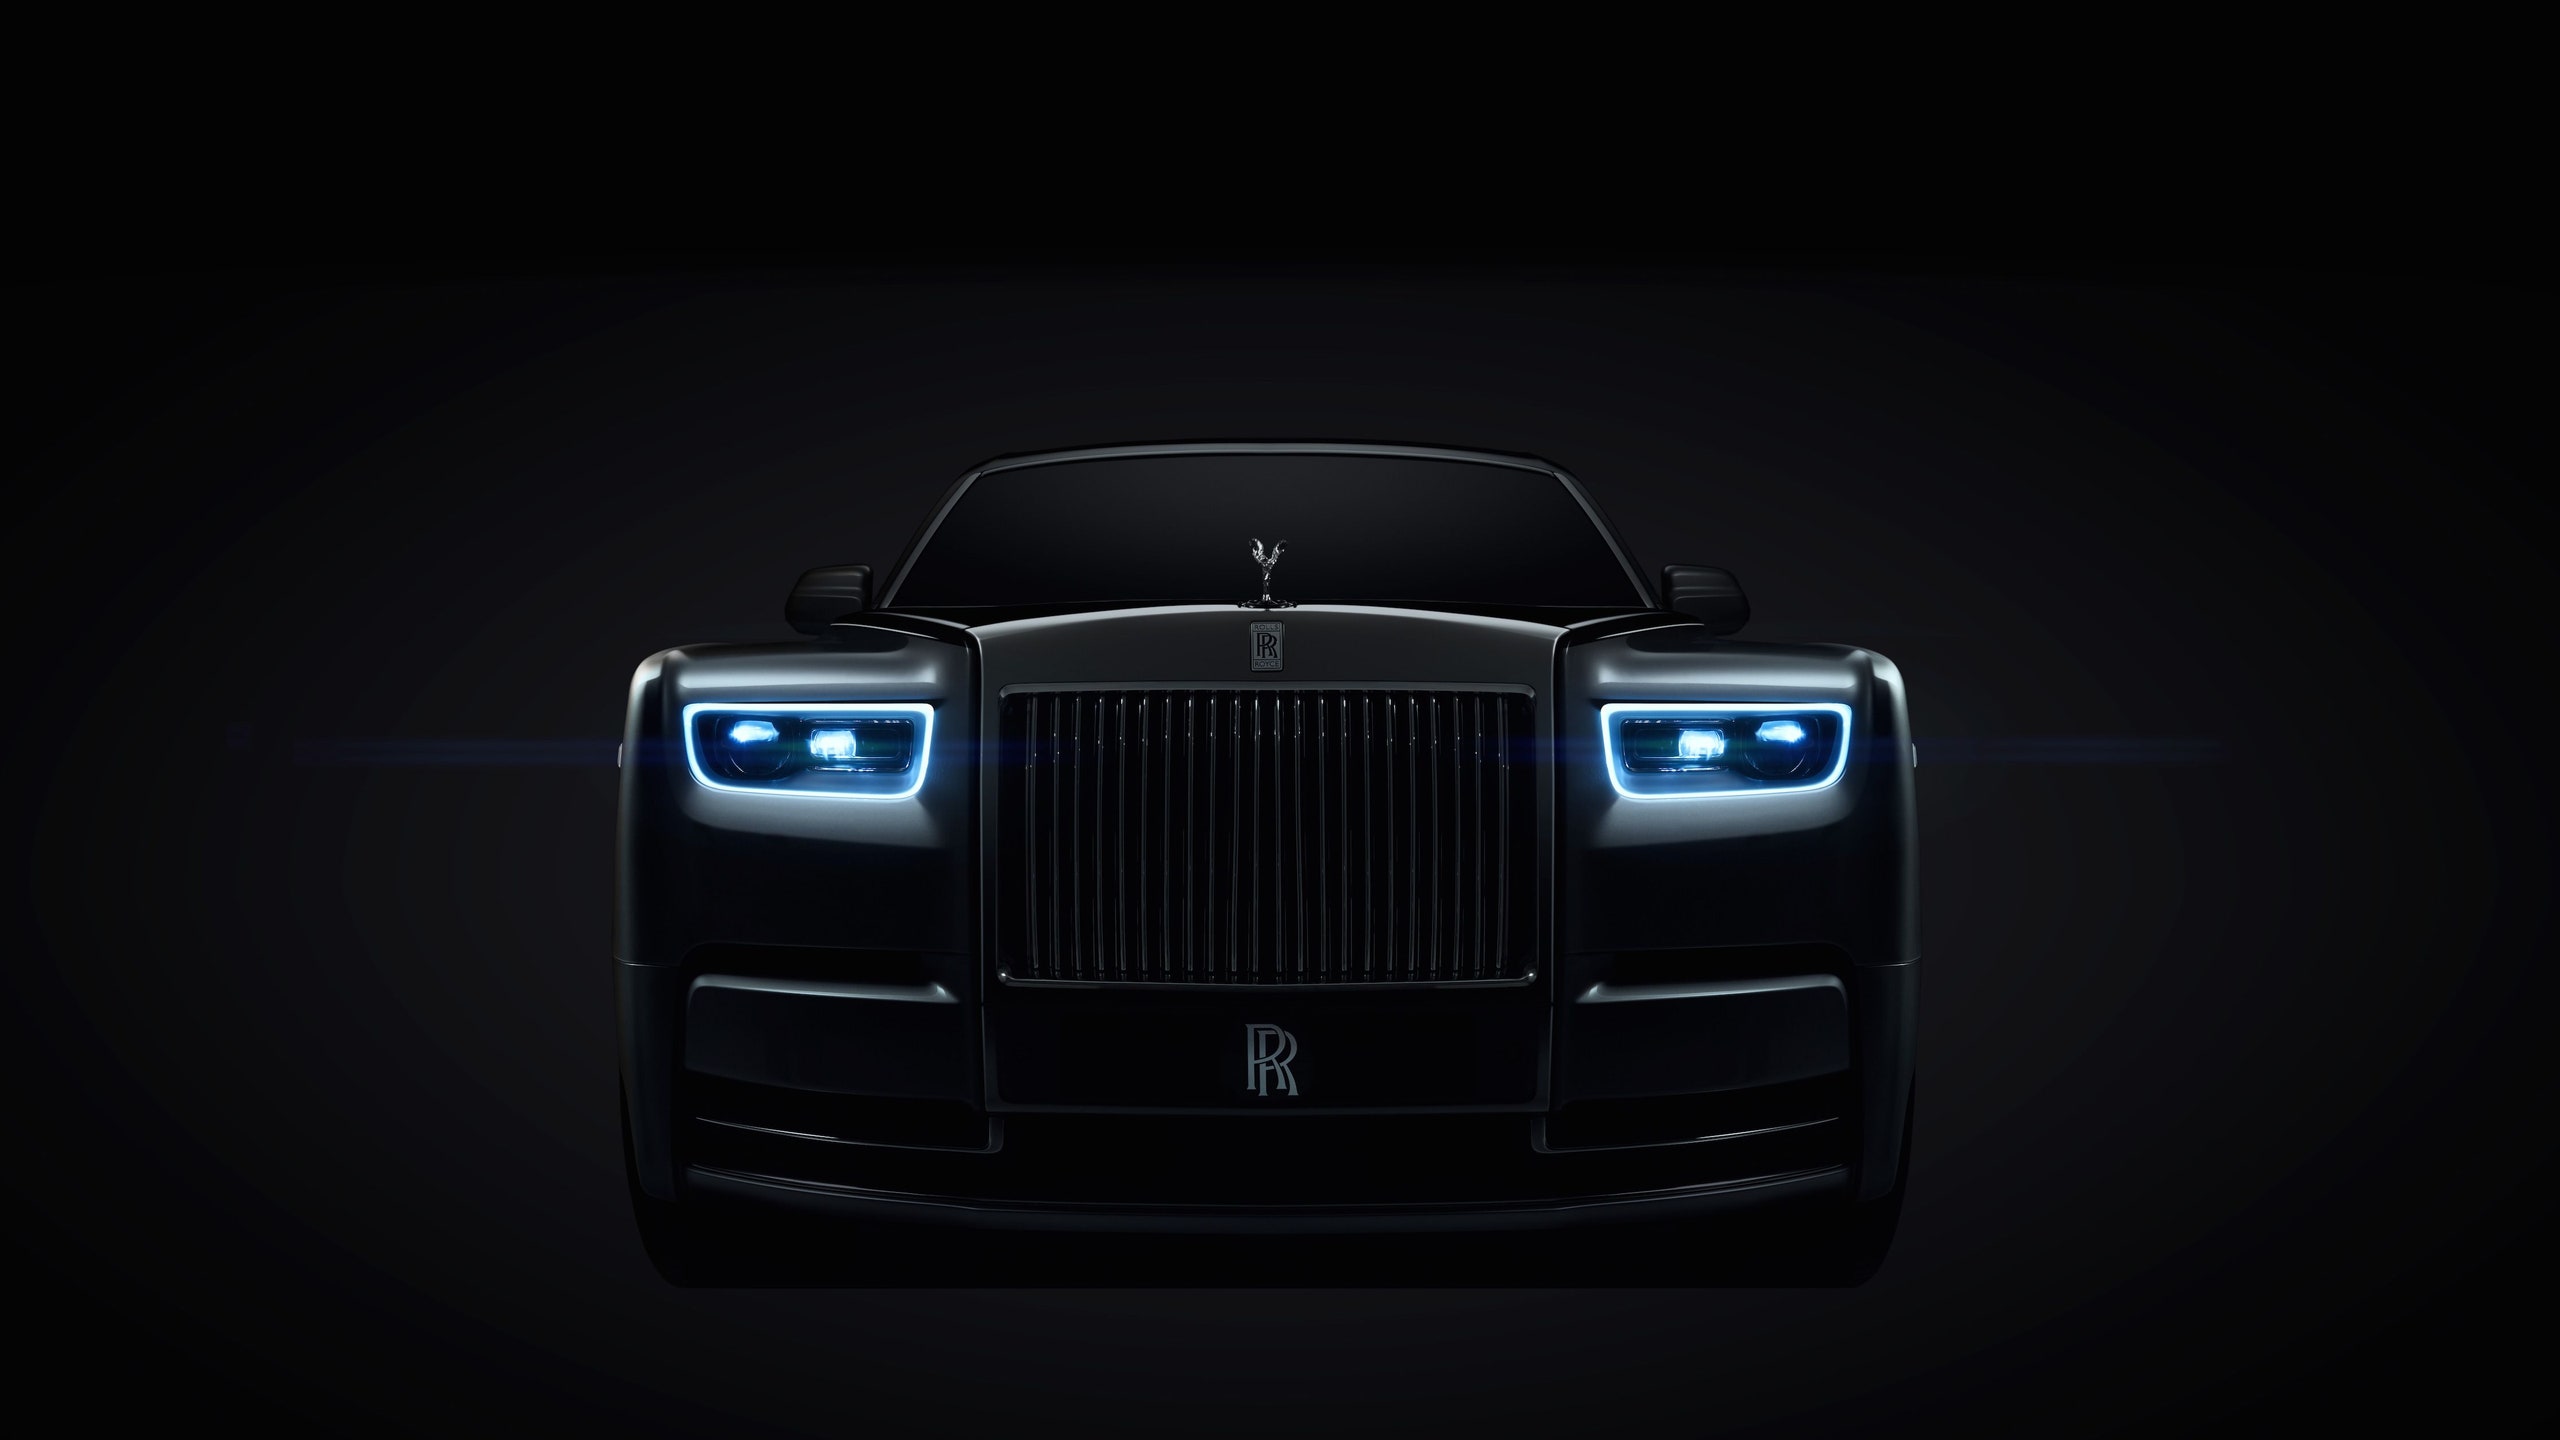 Rolls Royce Phantom Uk 2017 Wallpapers